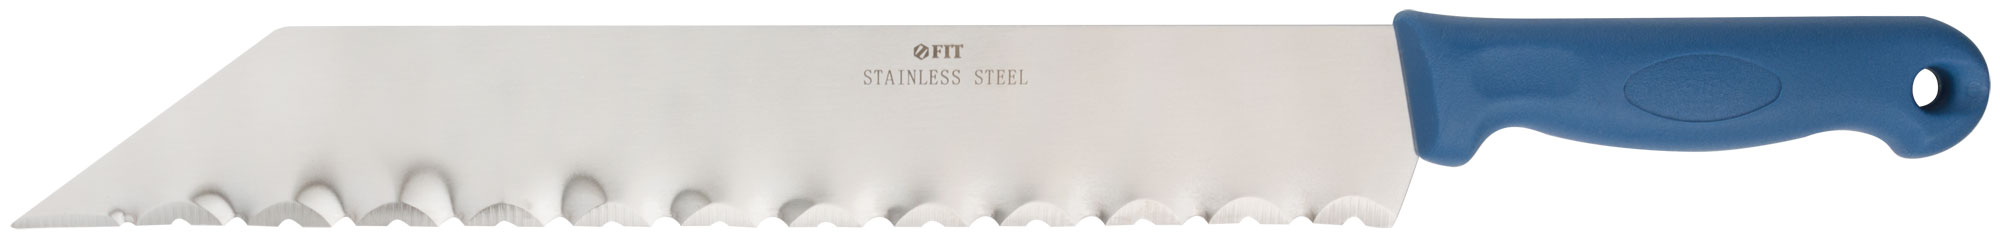 Нож трапециевидный 340х50 мм, FIT 10637 нож для резки изоляционных fit 10637 пластиковая ручка 50 мм